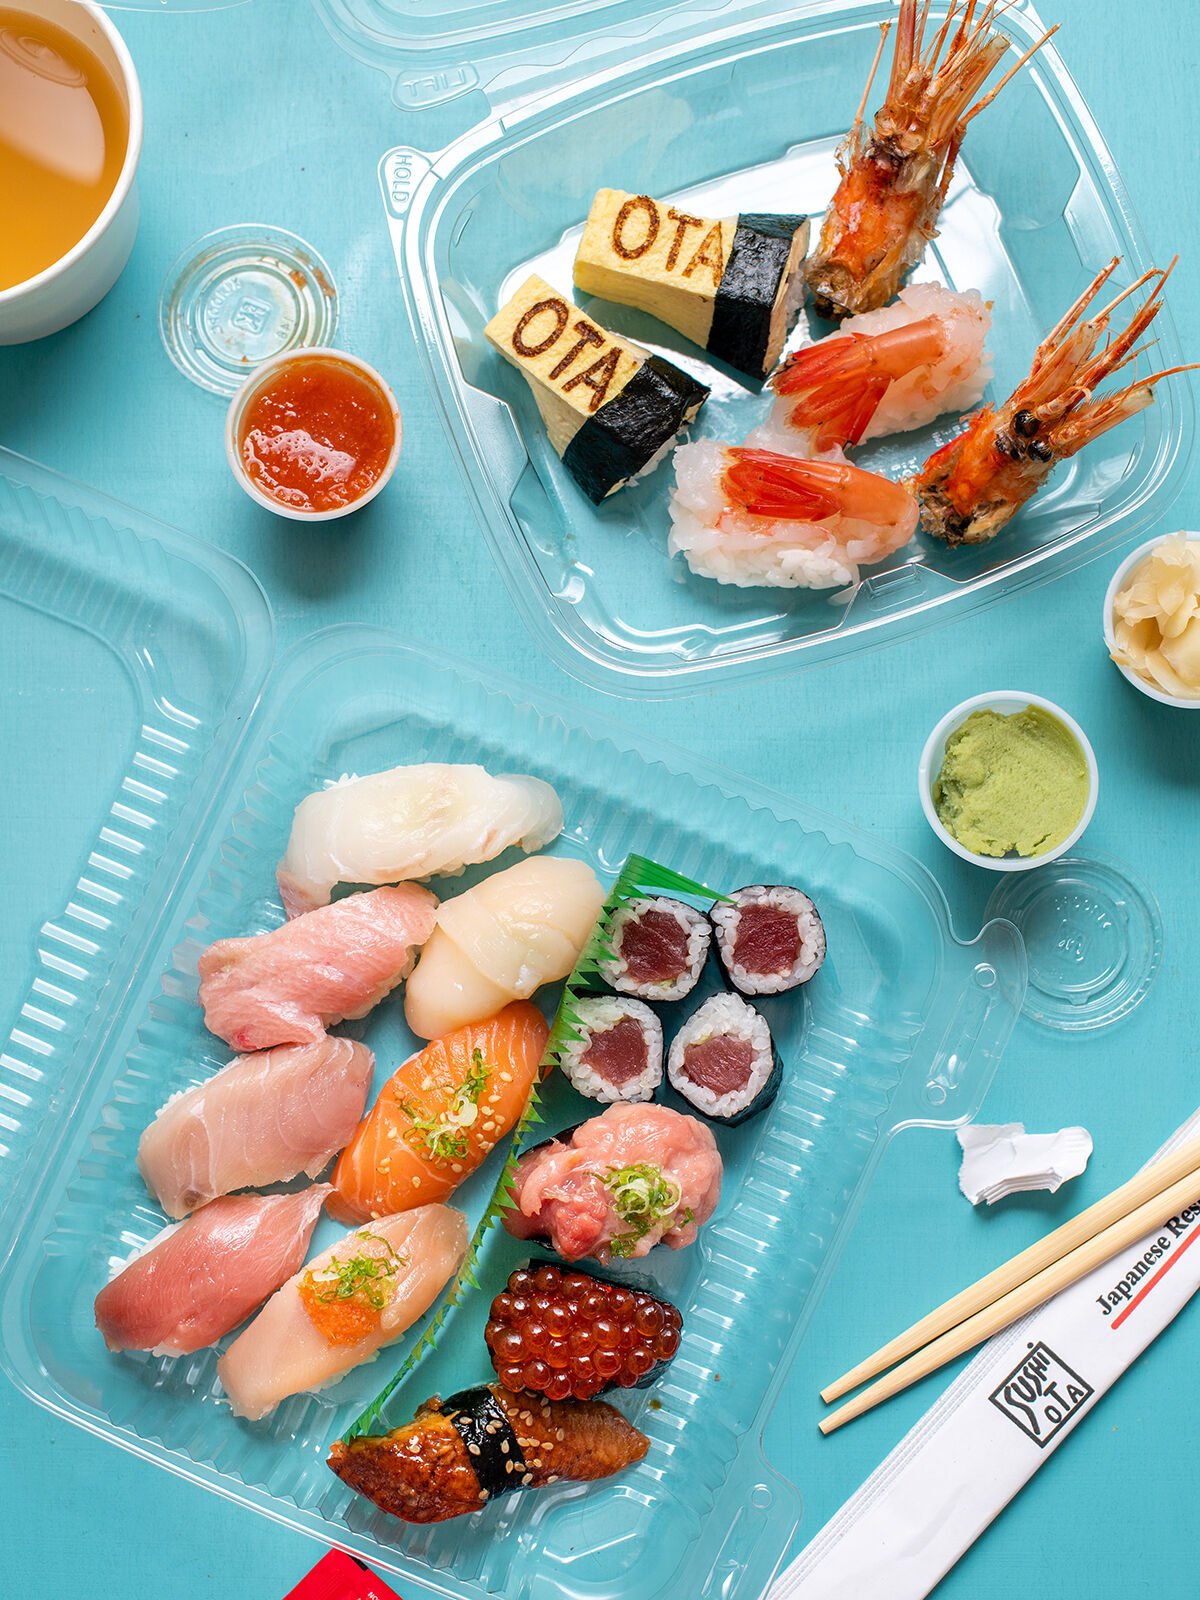 Best Restaurants 2020 / Best Sushi Readers’ Pick Sushi Ota